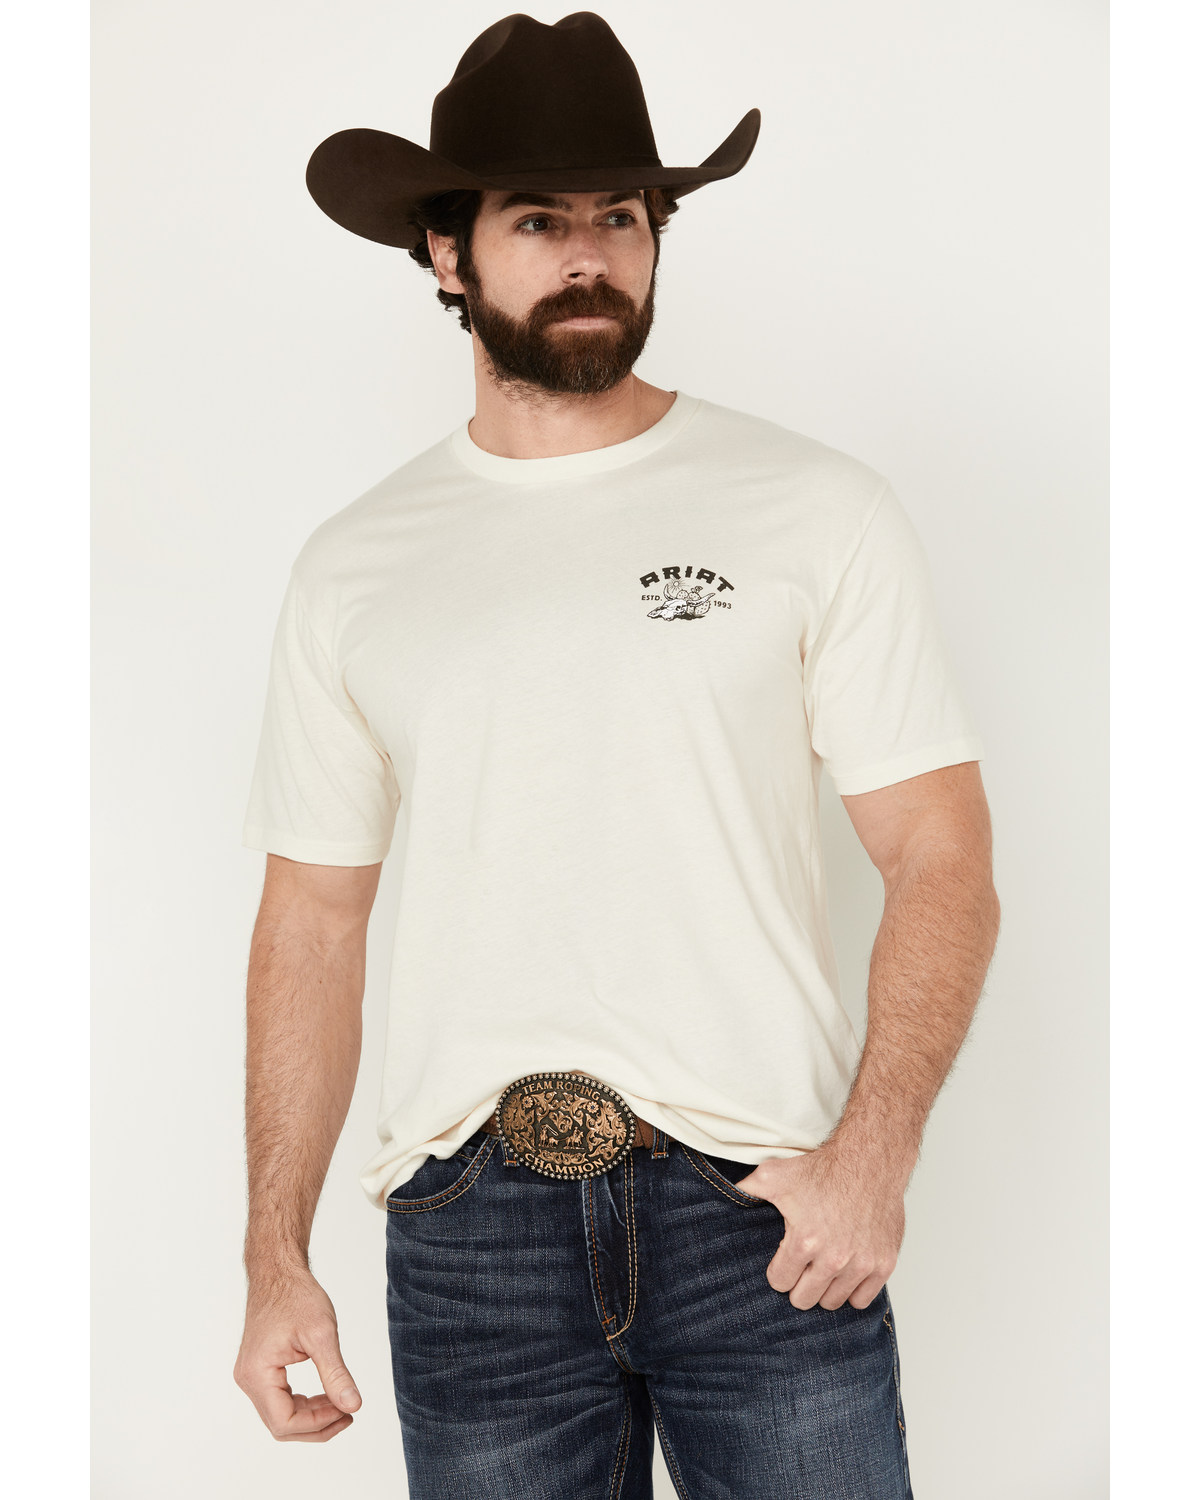 Ariat Men's Southwest Cactus Short Sleeve Graphic T-Shirt